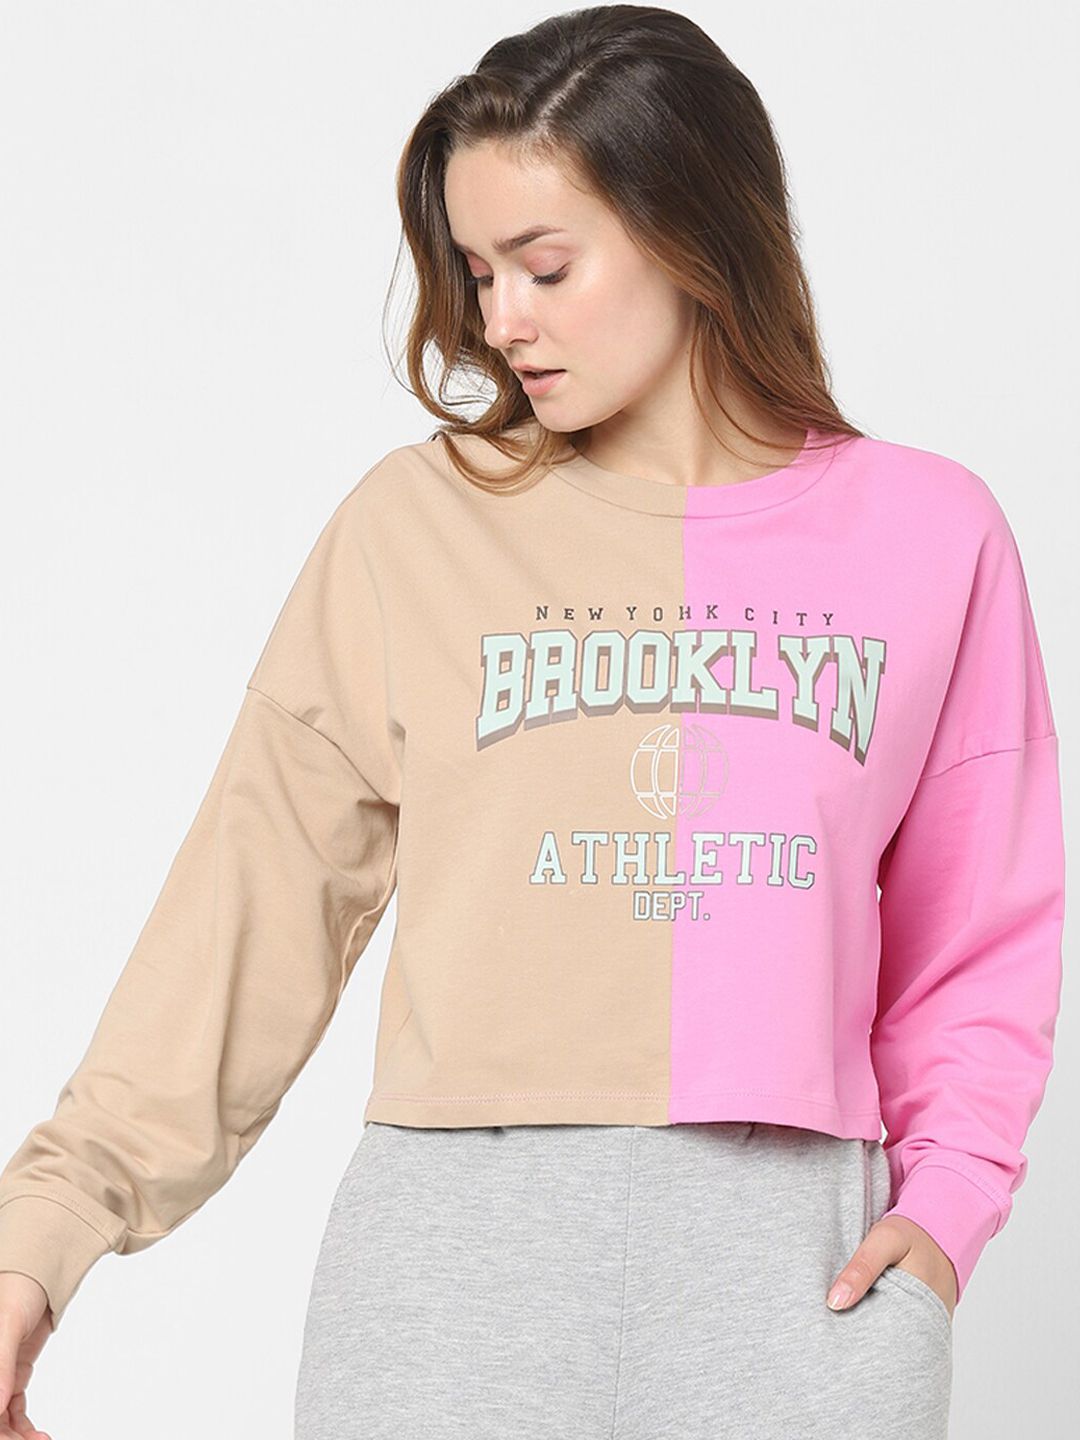 Vero Moda Women Pink & Beige  Colourblocked Typography  Printed Sweatshirt Price in India